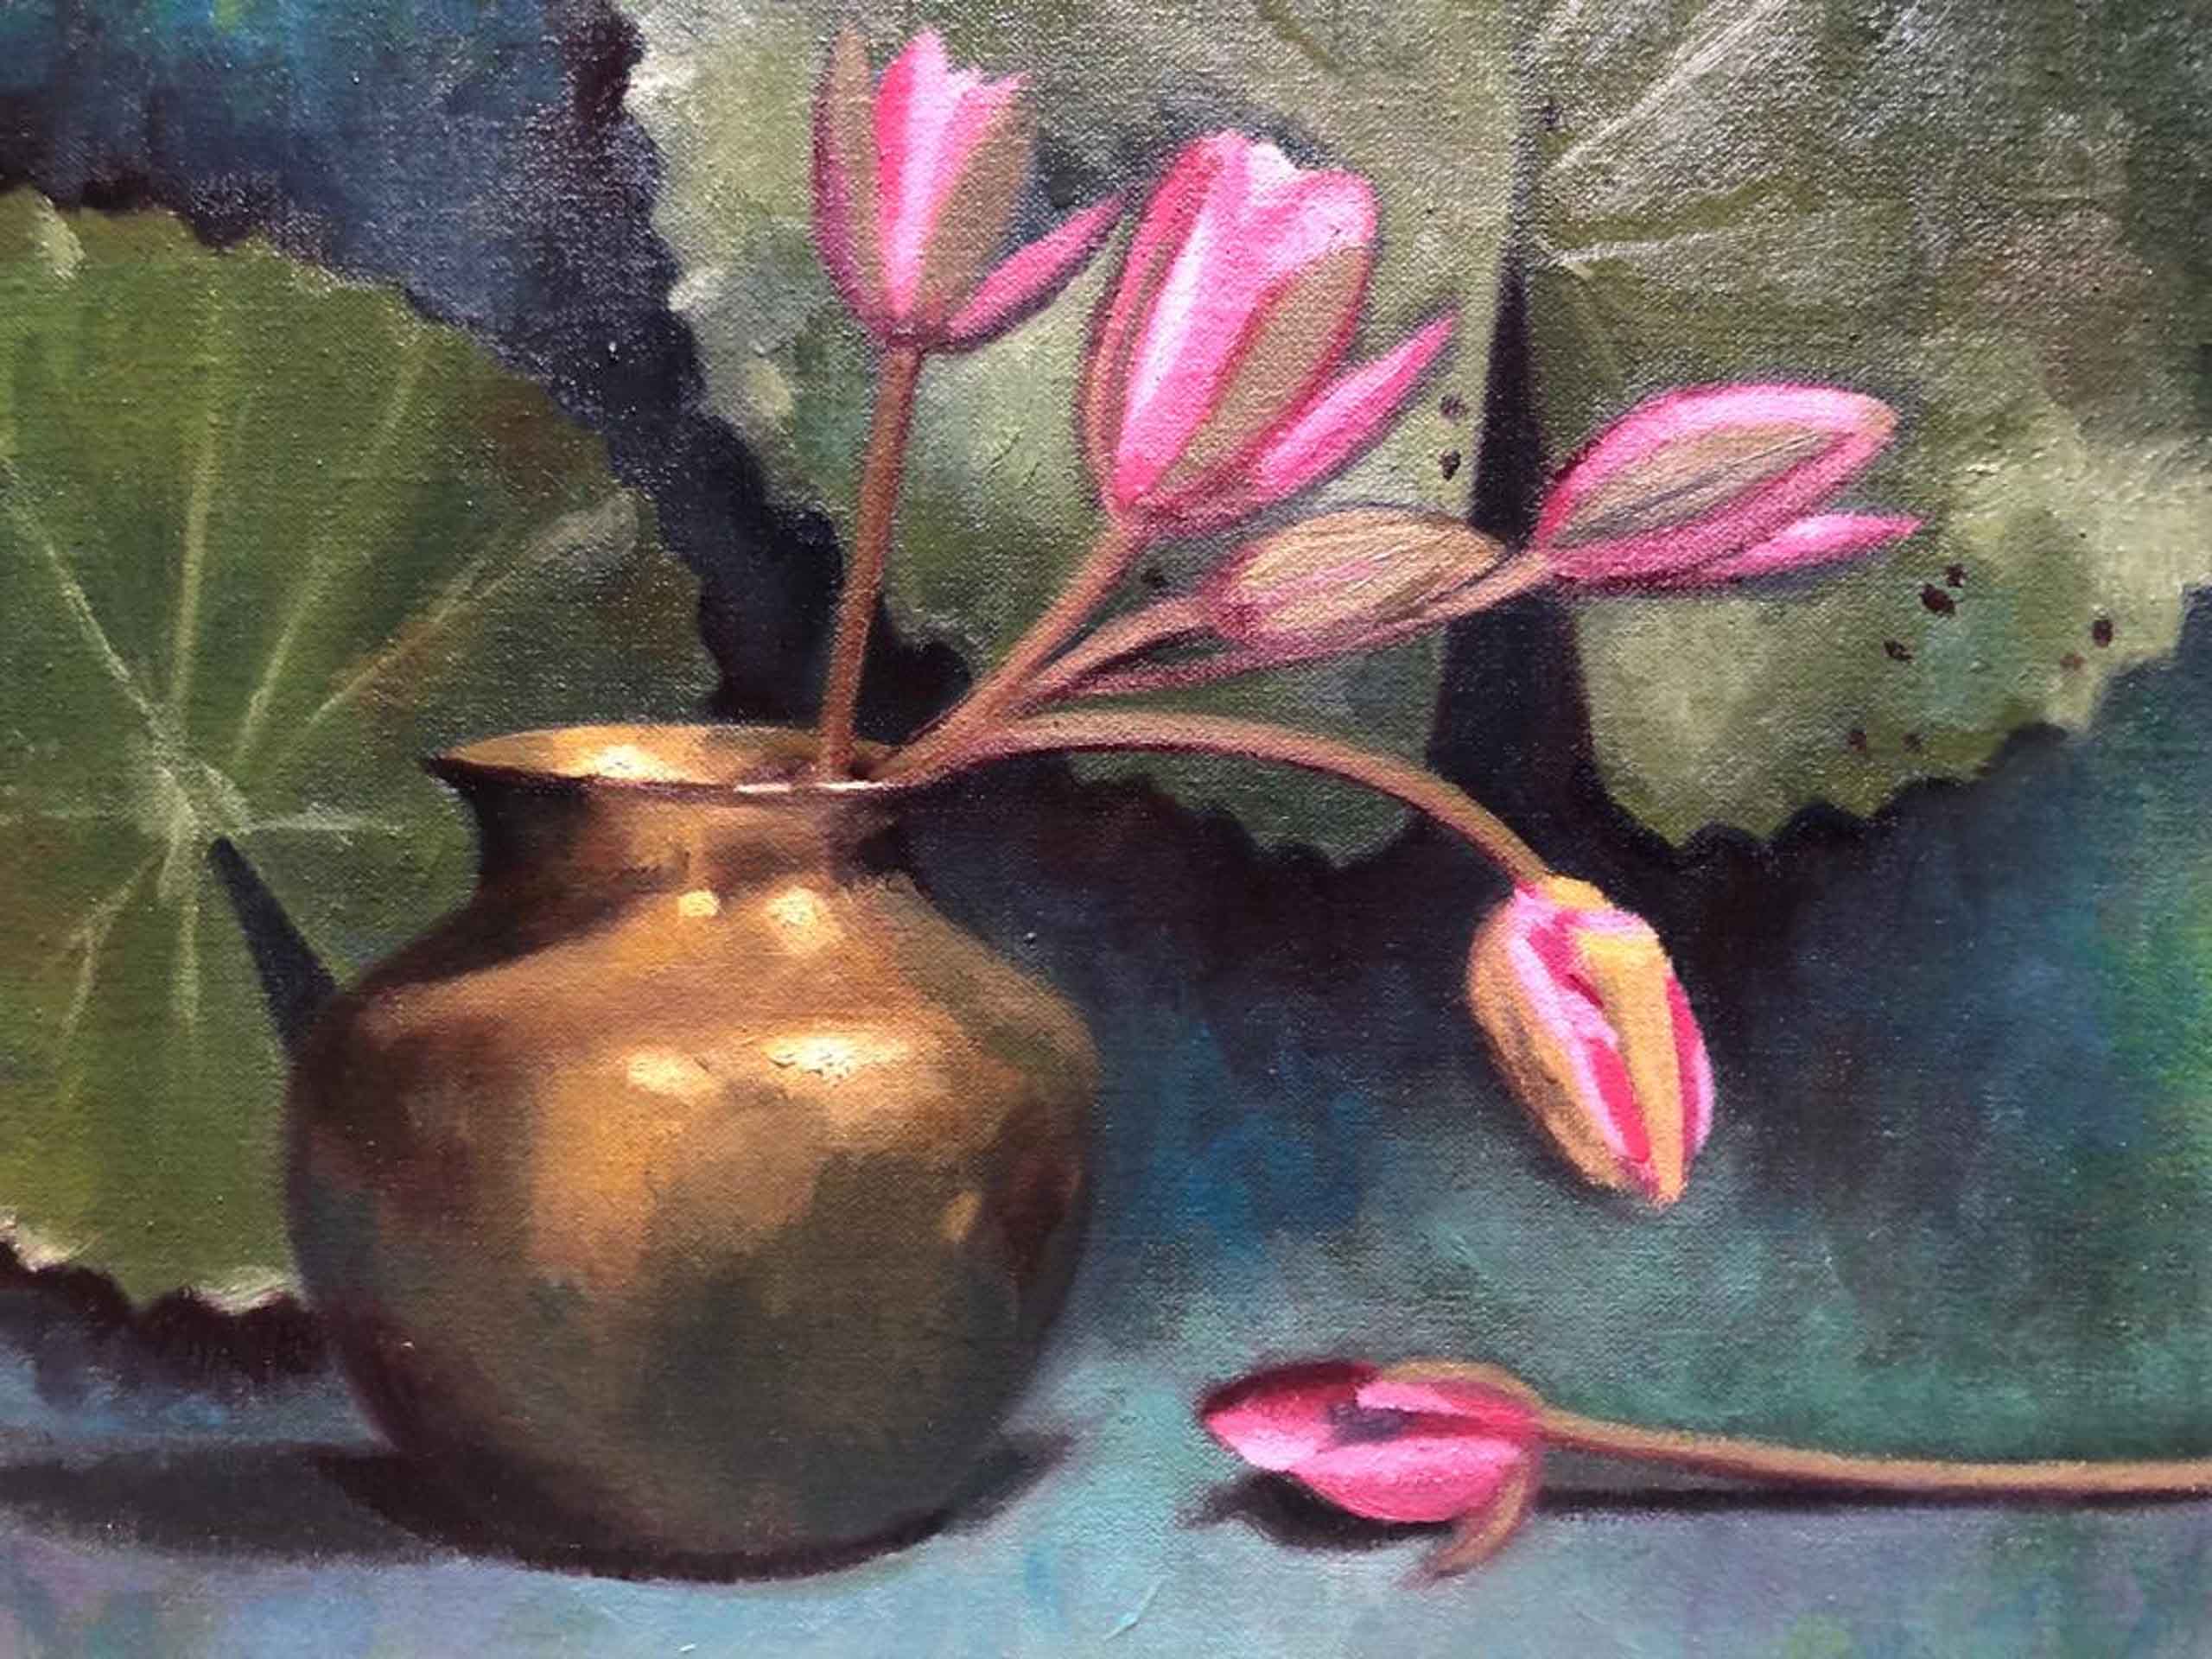 Duhita Samaiyar, "Water Lillies", Oil on linen, 35 x 30 cm, 2021